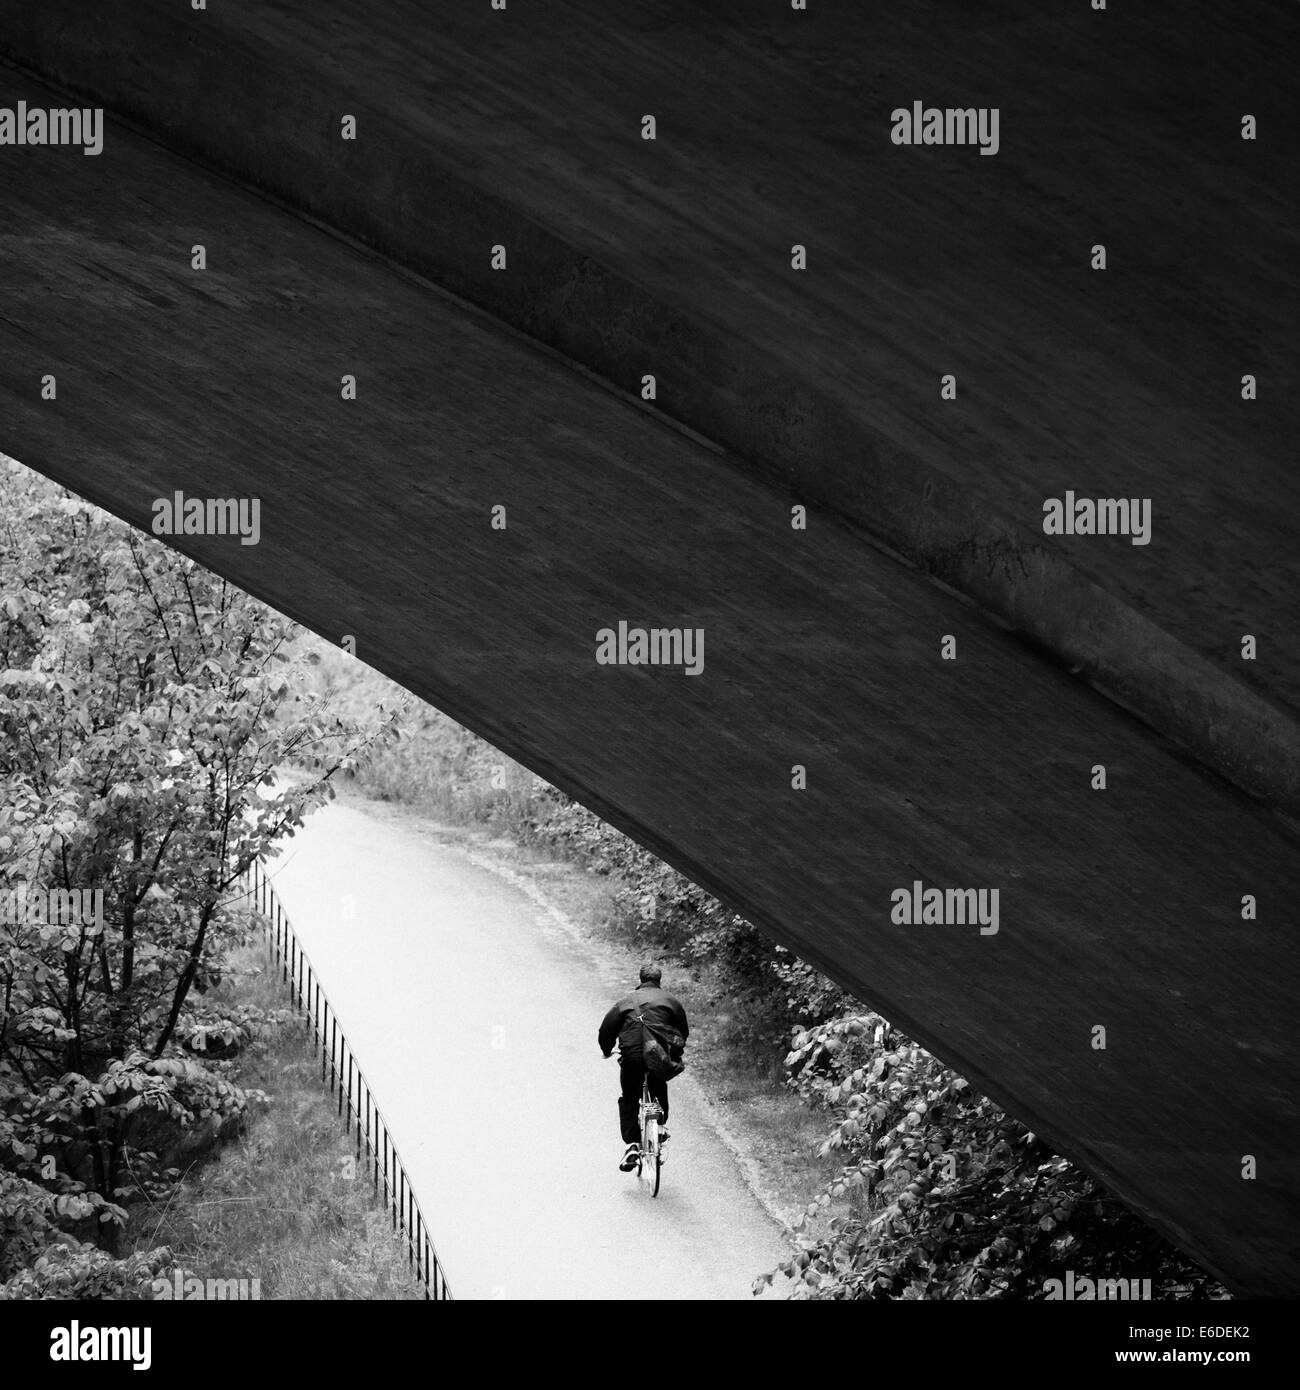 Man riding a bicycle on bike path Stock Photo